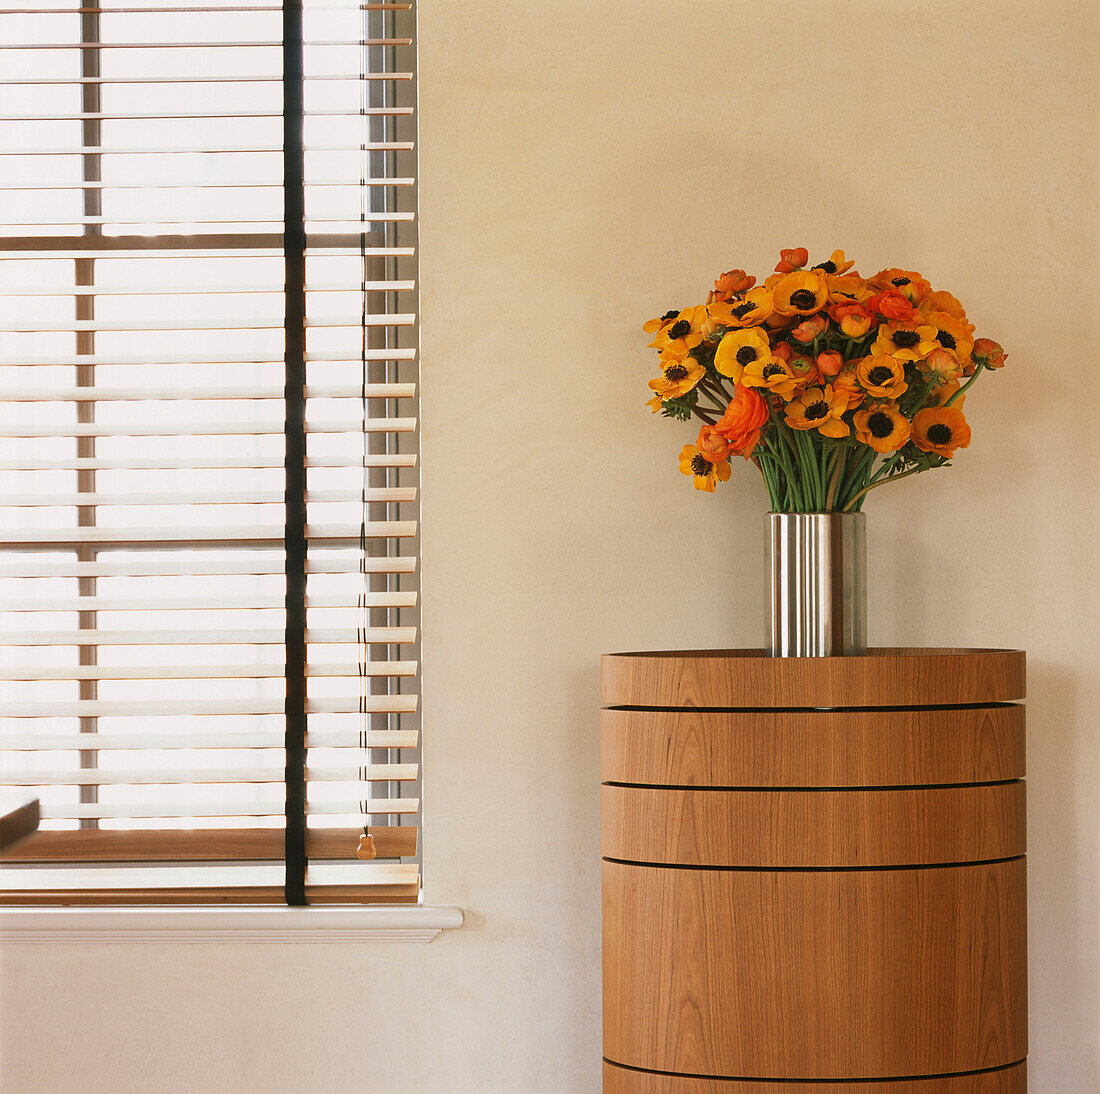 Window with venetian blinds and metallic vase with orange Anemone flowers